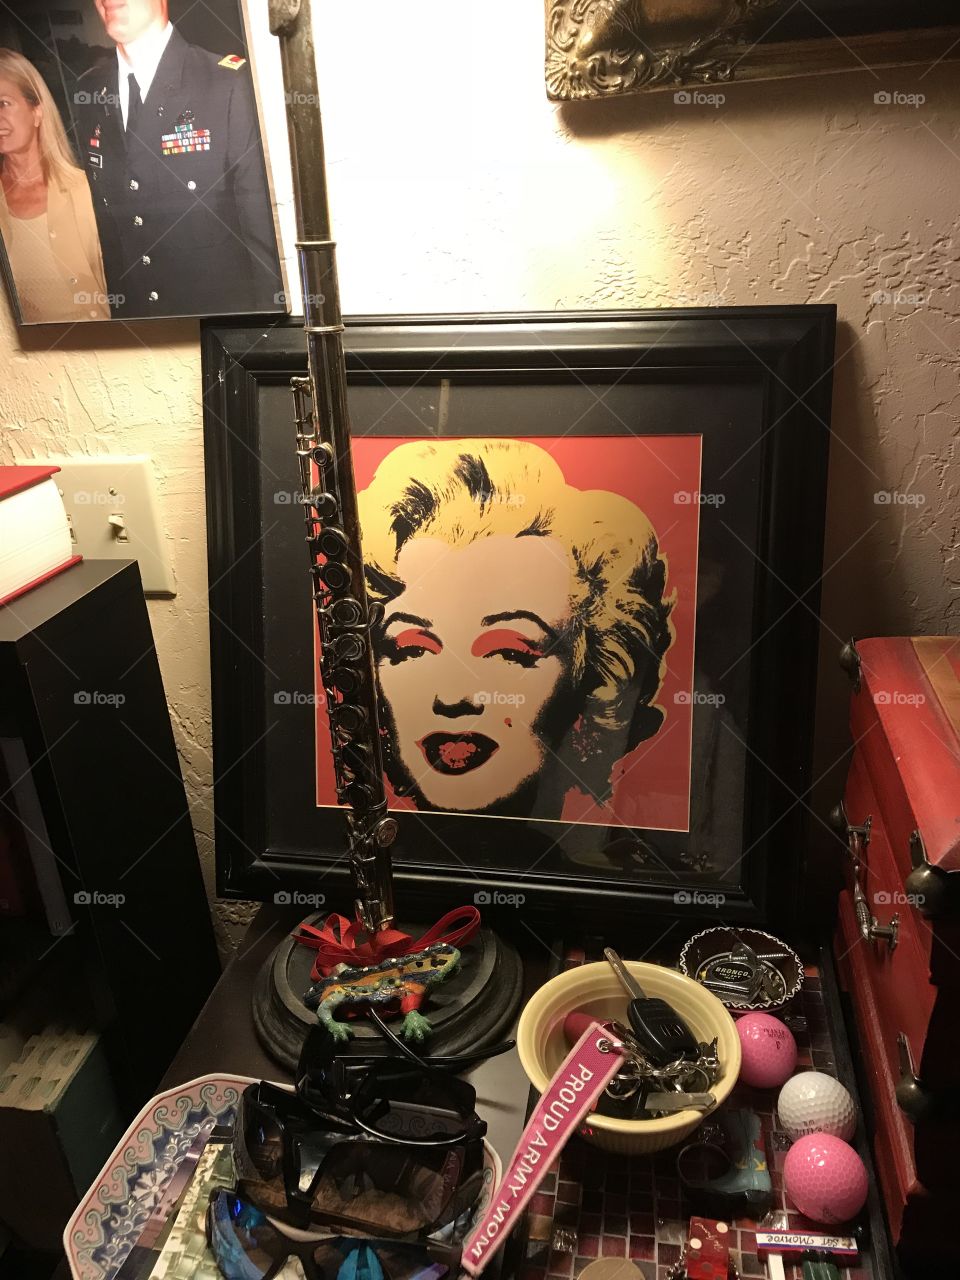 Andy Warhol’s Marilyn Monroe 